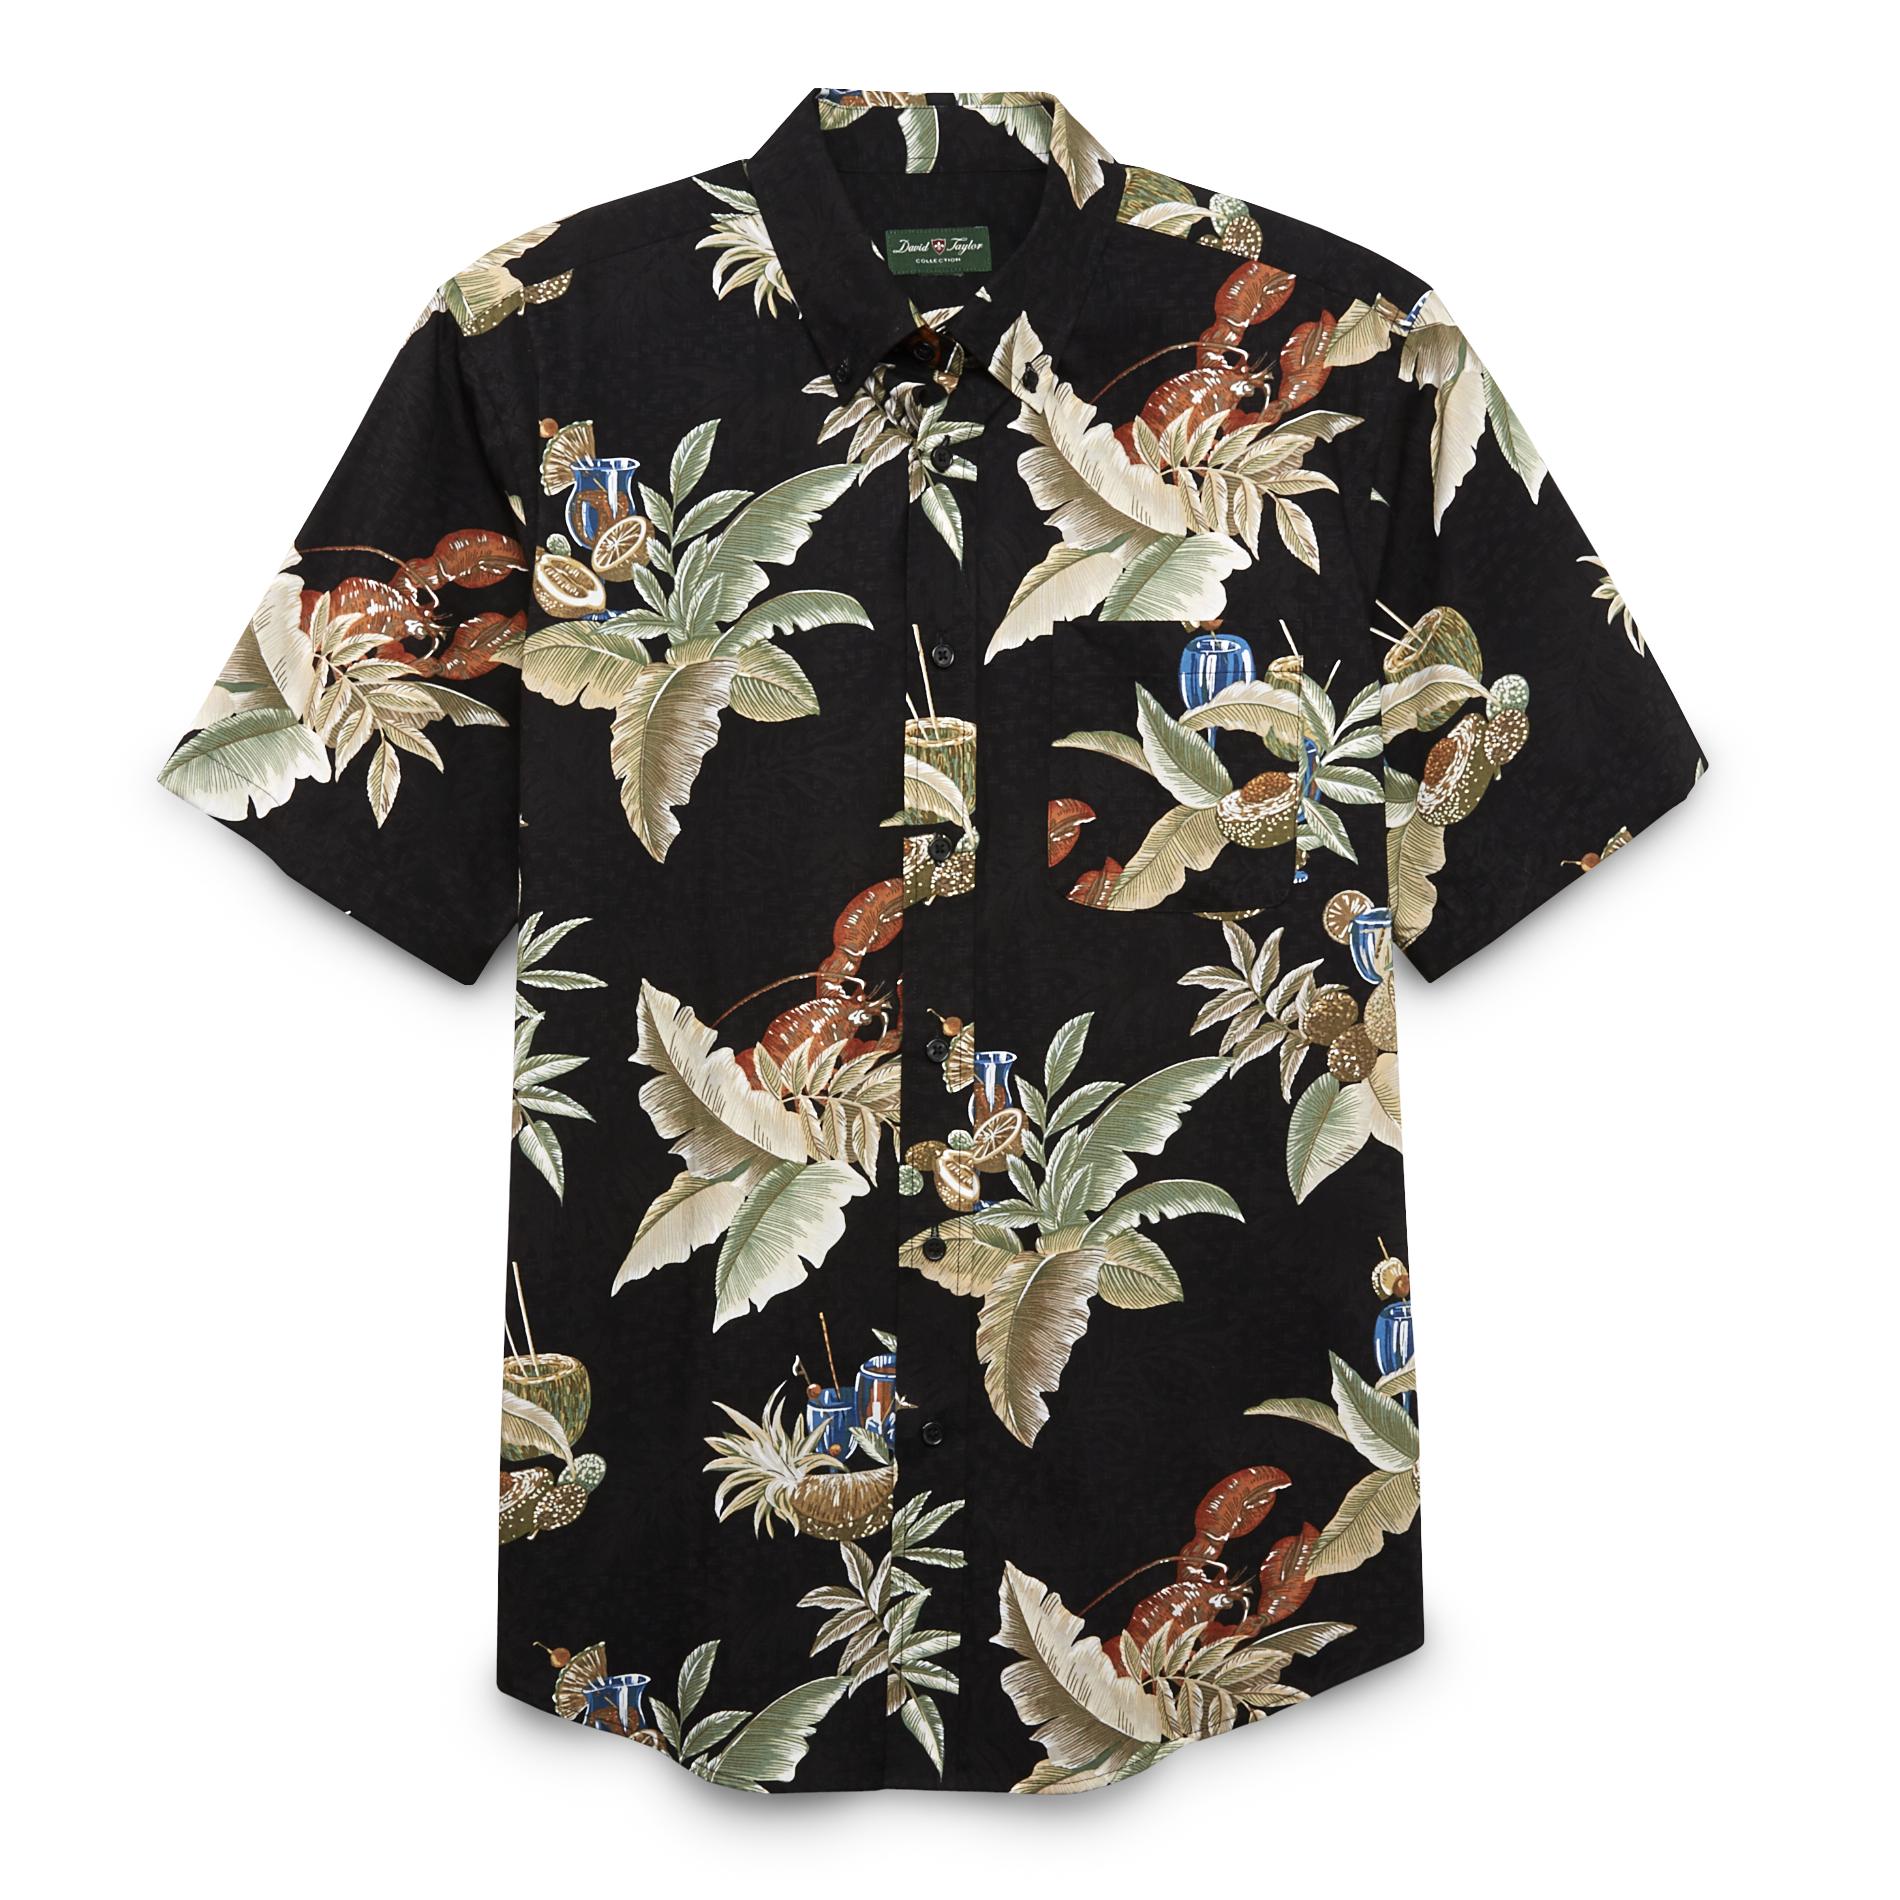 David Taylor Collection Men's Short-Sleeve Button-Front Shirt - Tropical Ferns & Cocktails